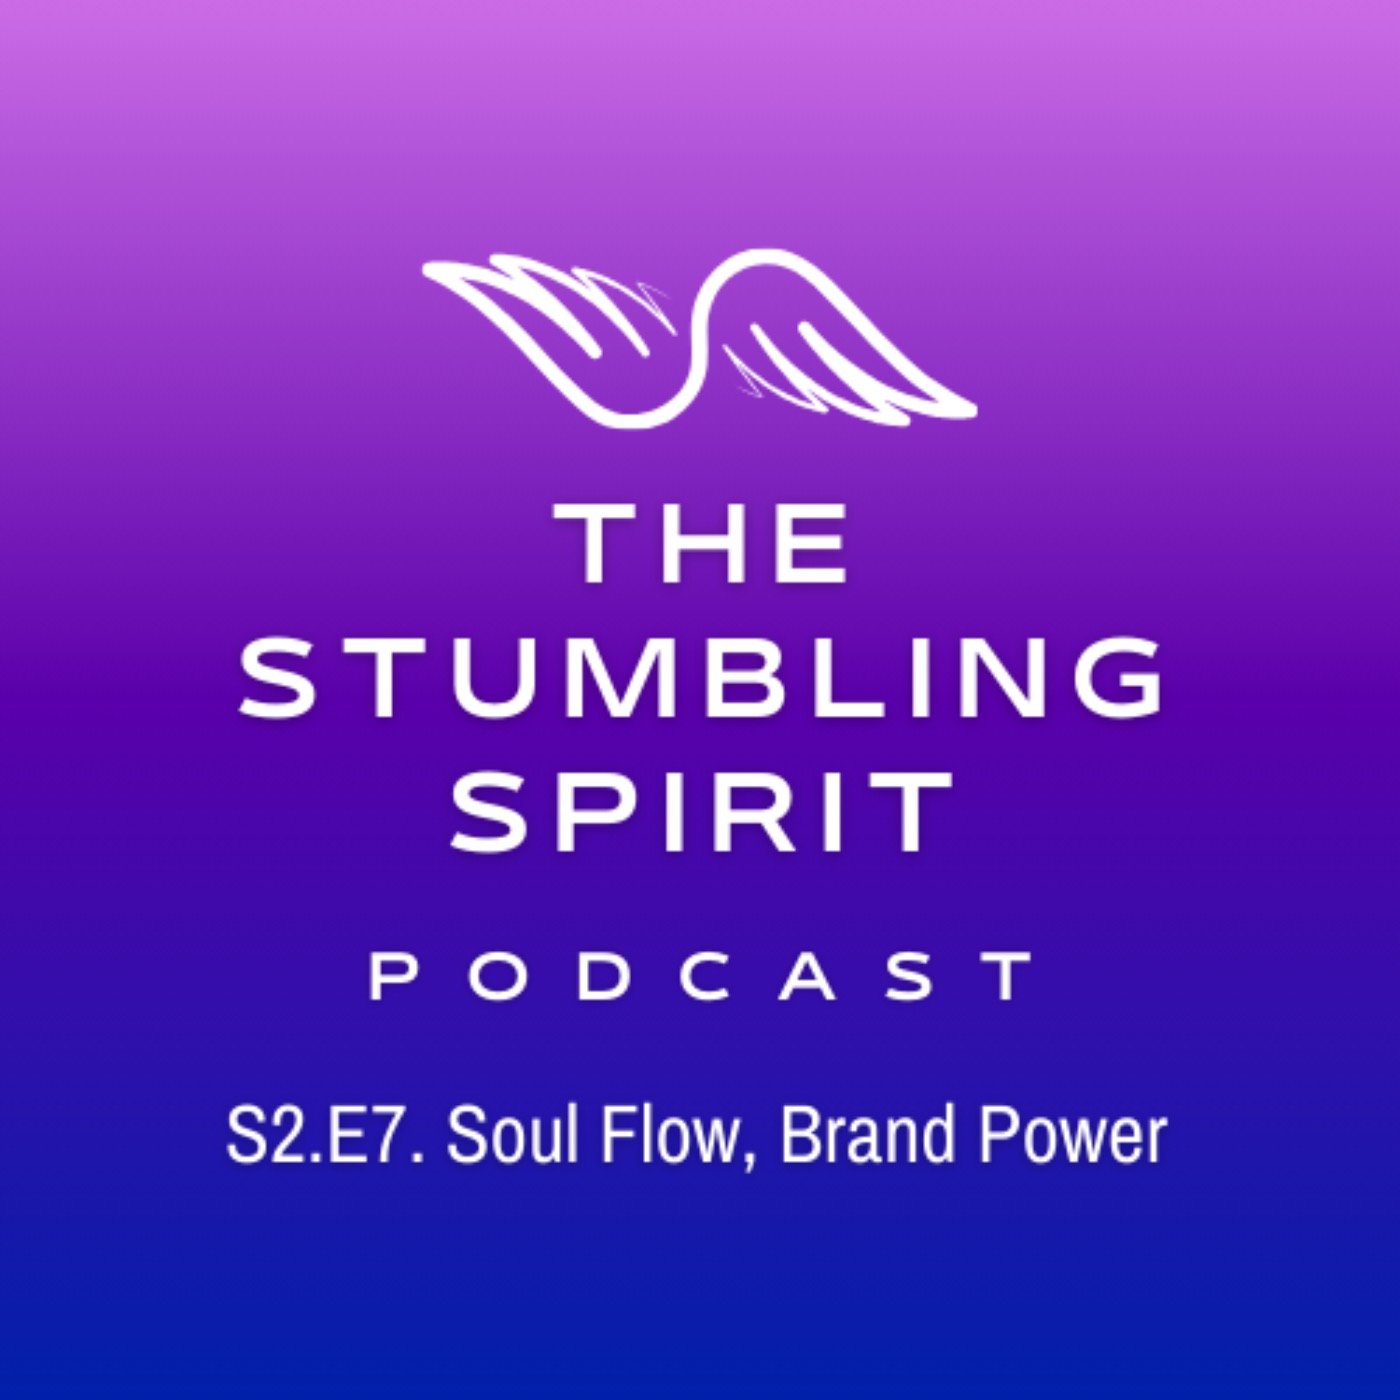 Soul Flow, Brand Power